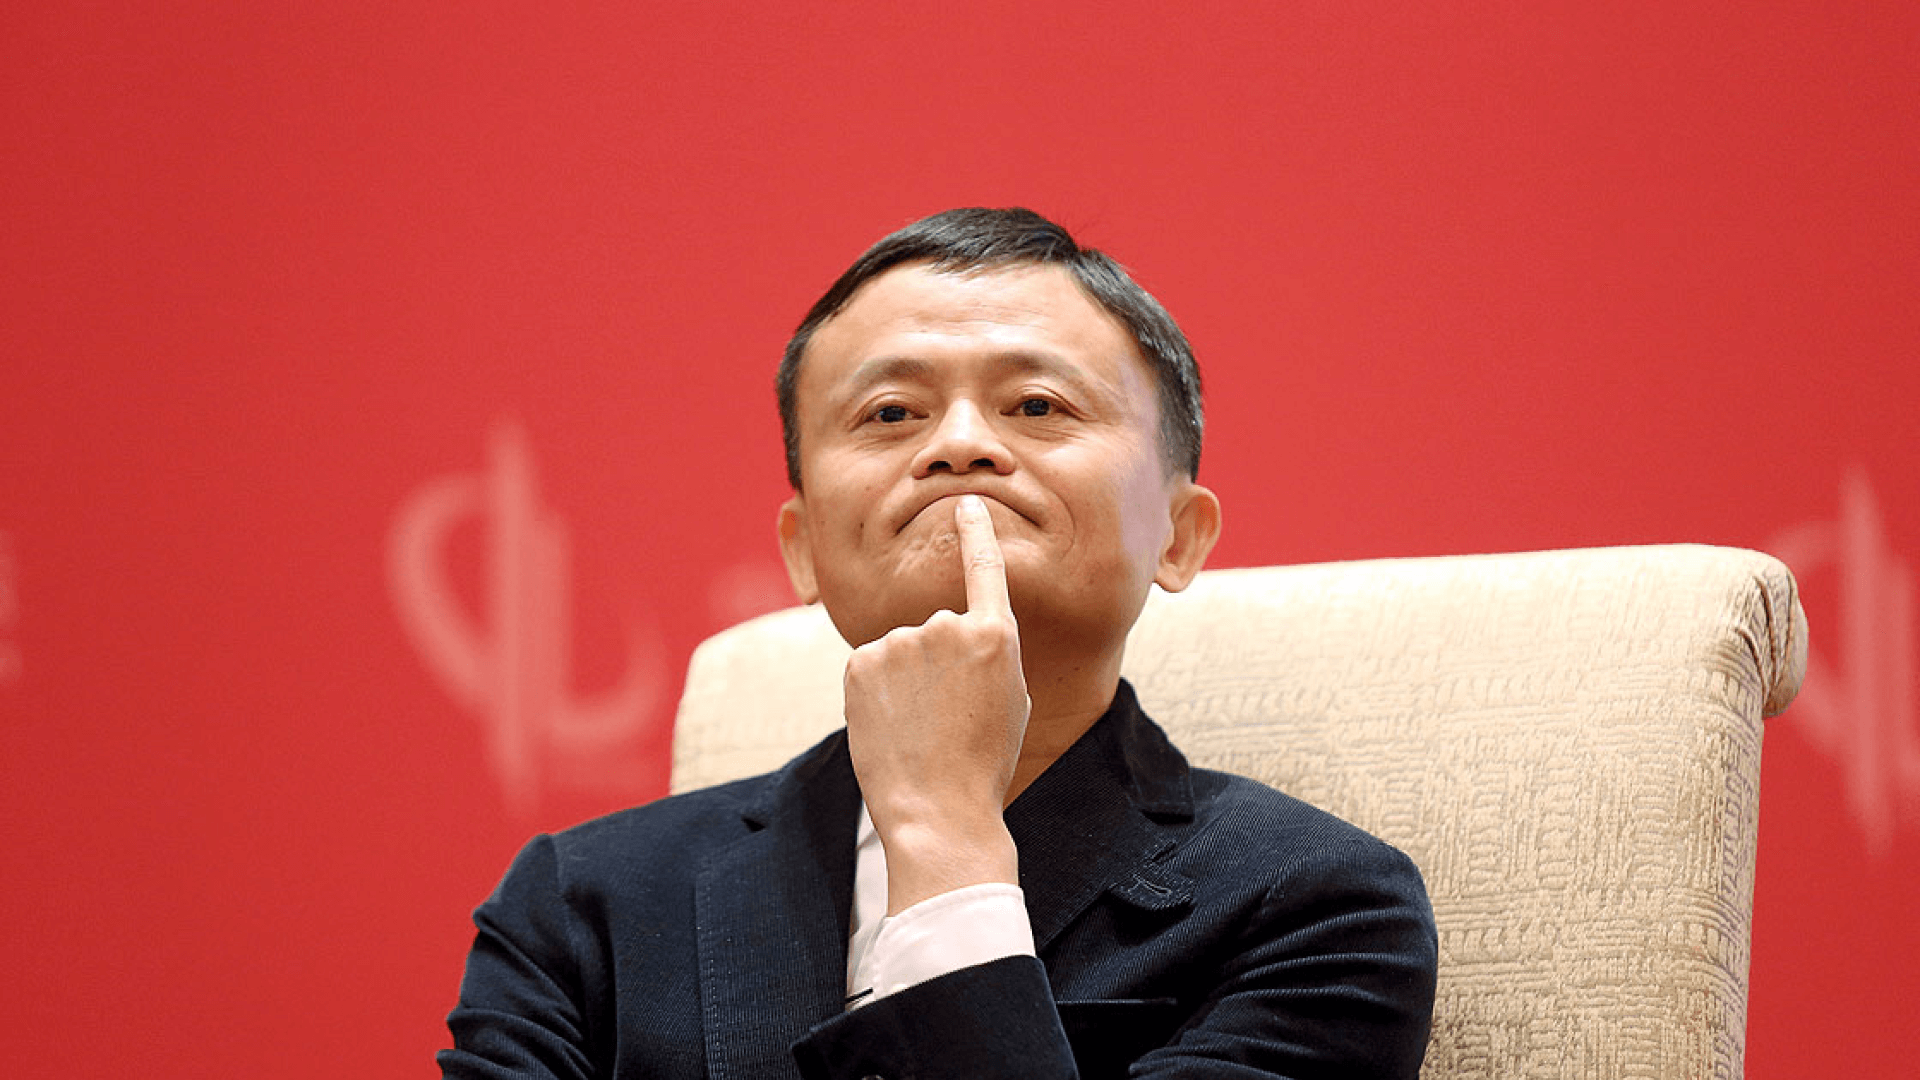 Jack Ma, Alibaba co-founder